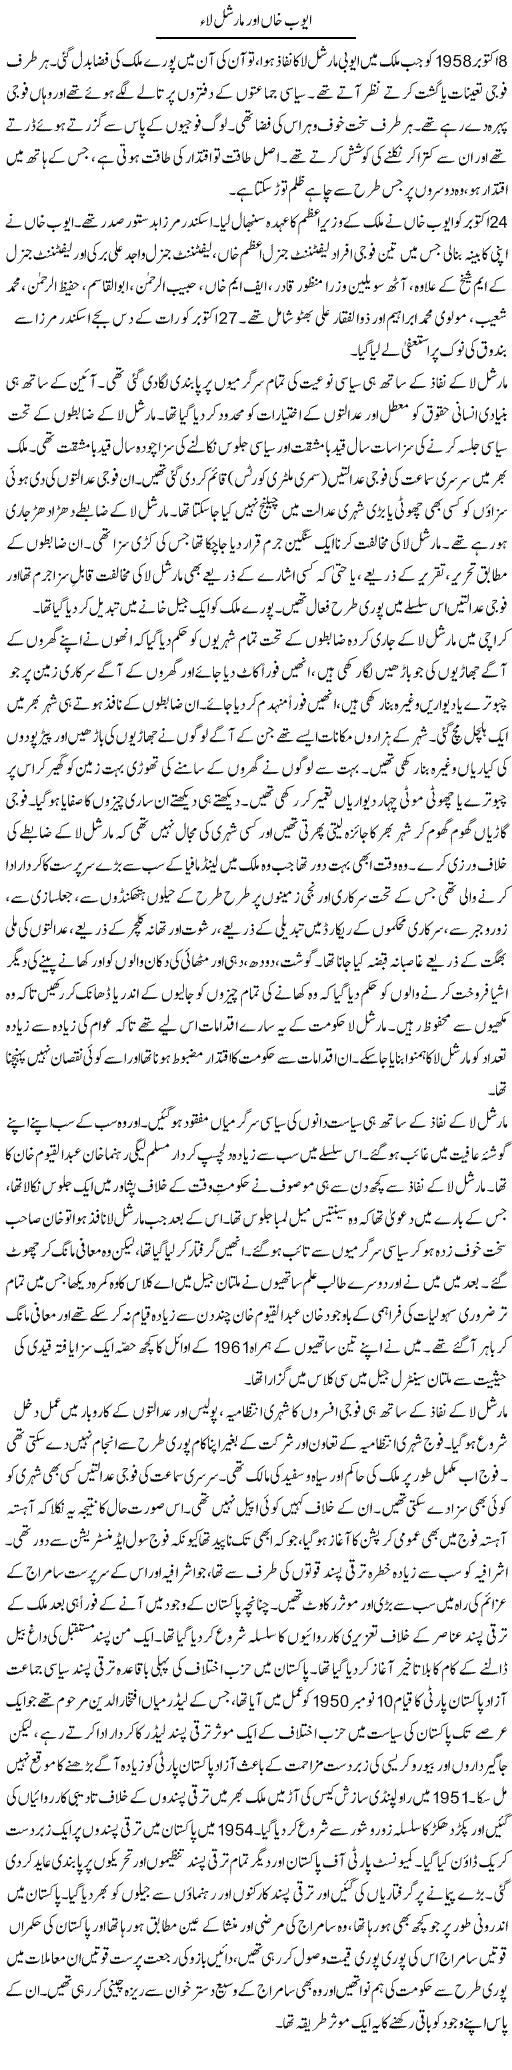 Ayub Khan Express Column Anwar Ahsan 6 August 2011